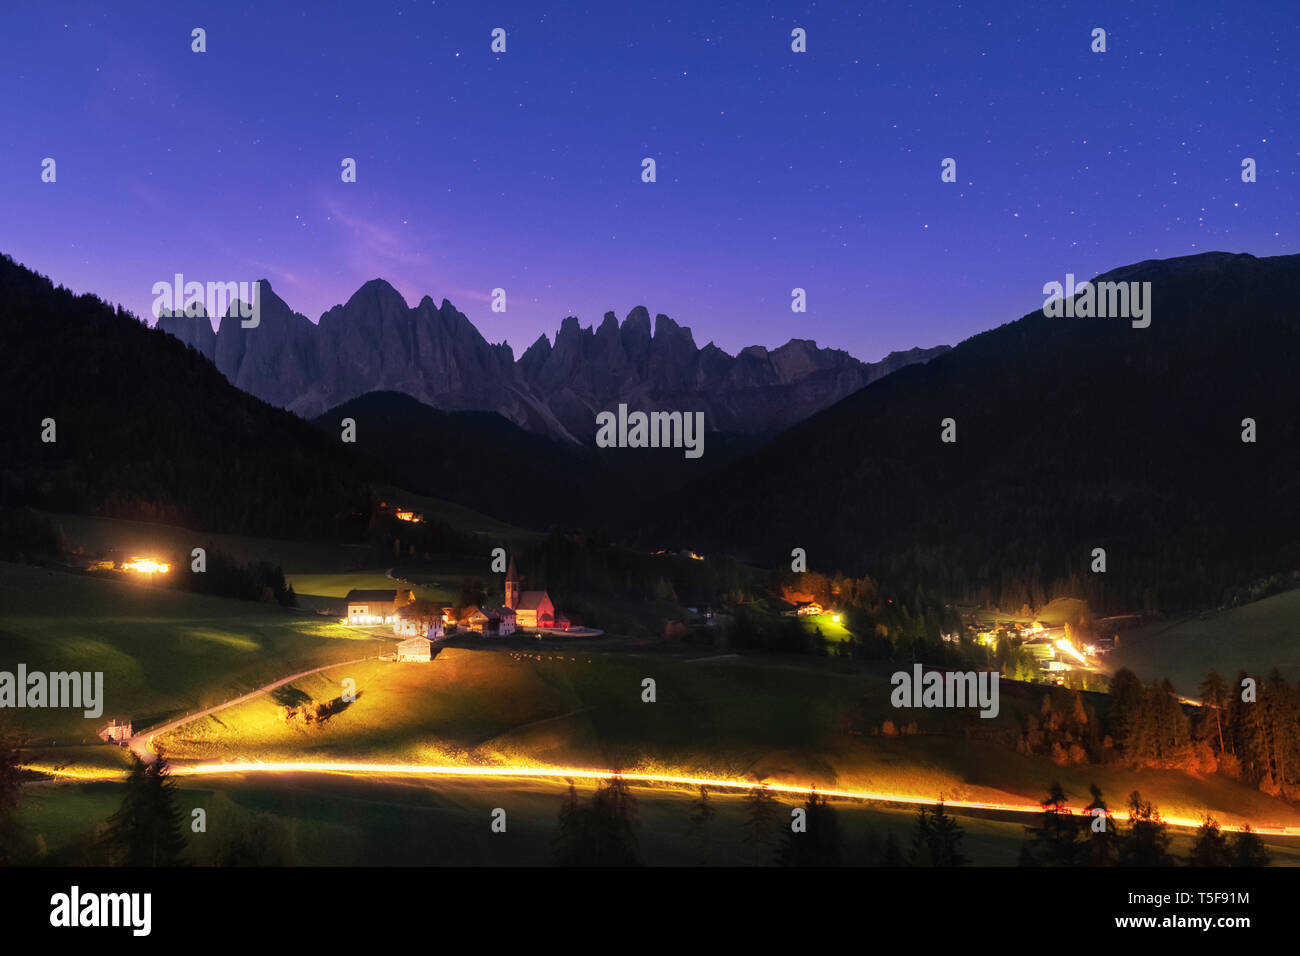 Nacht Sternenhimmel über Santa Maddalena Dorf in den Dolomiten Alpen Italien Stockfoto